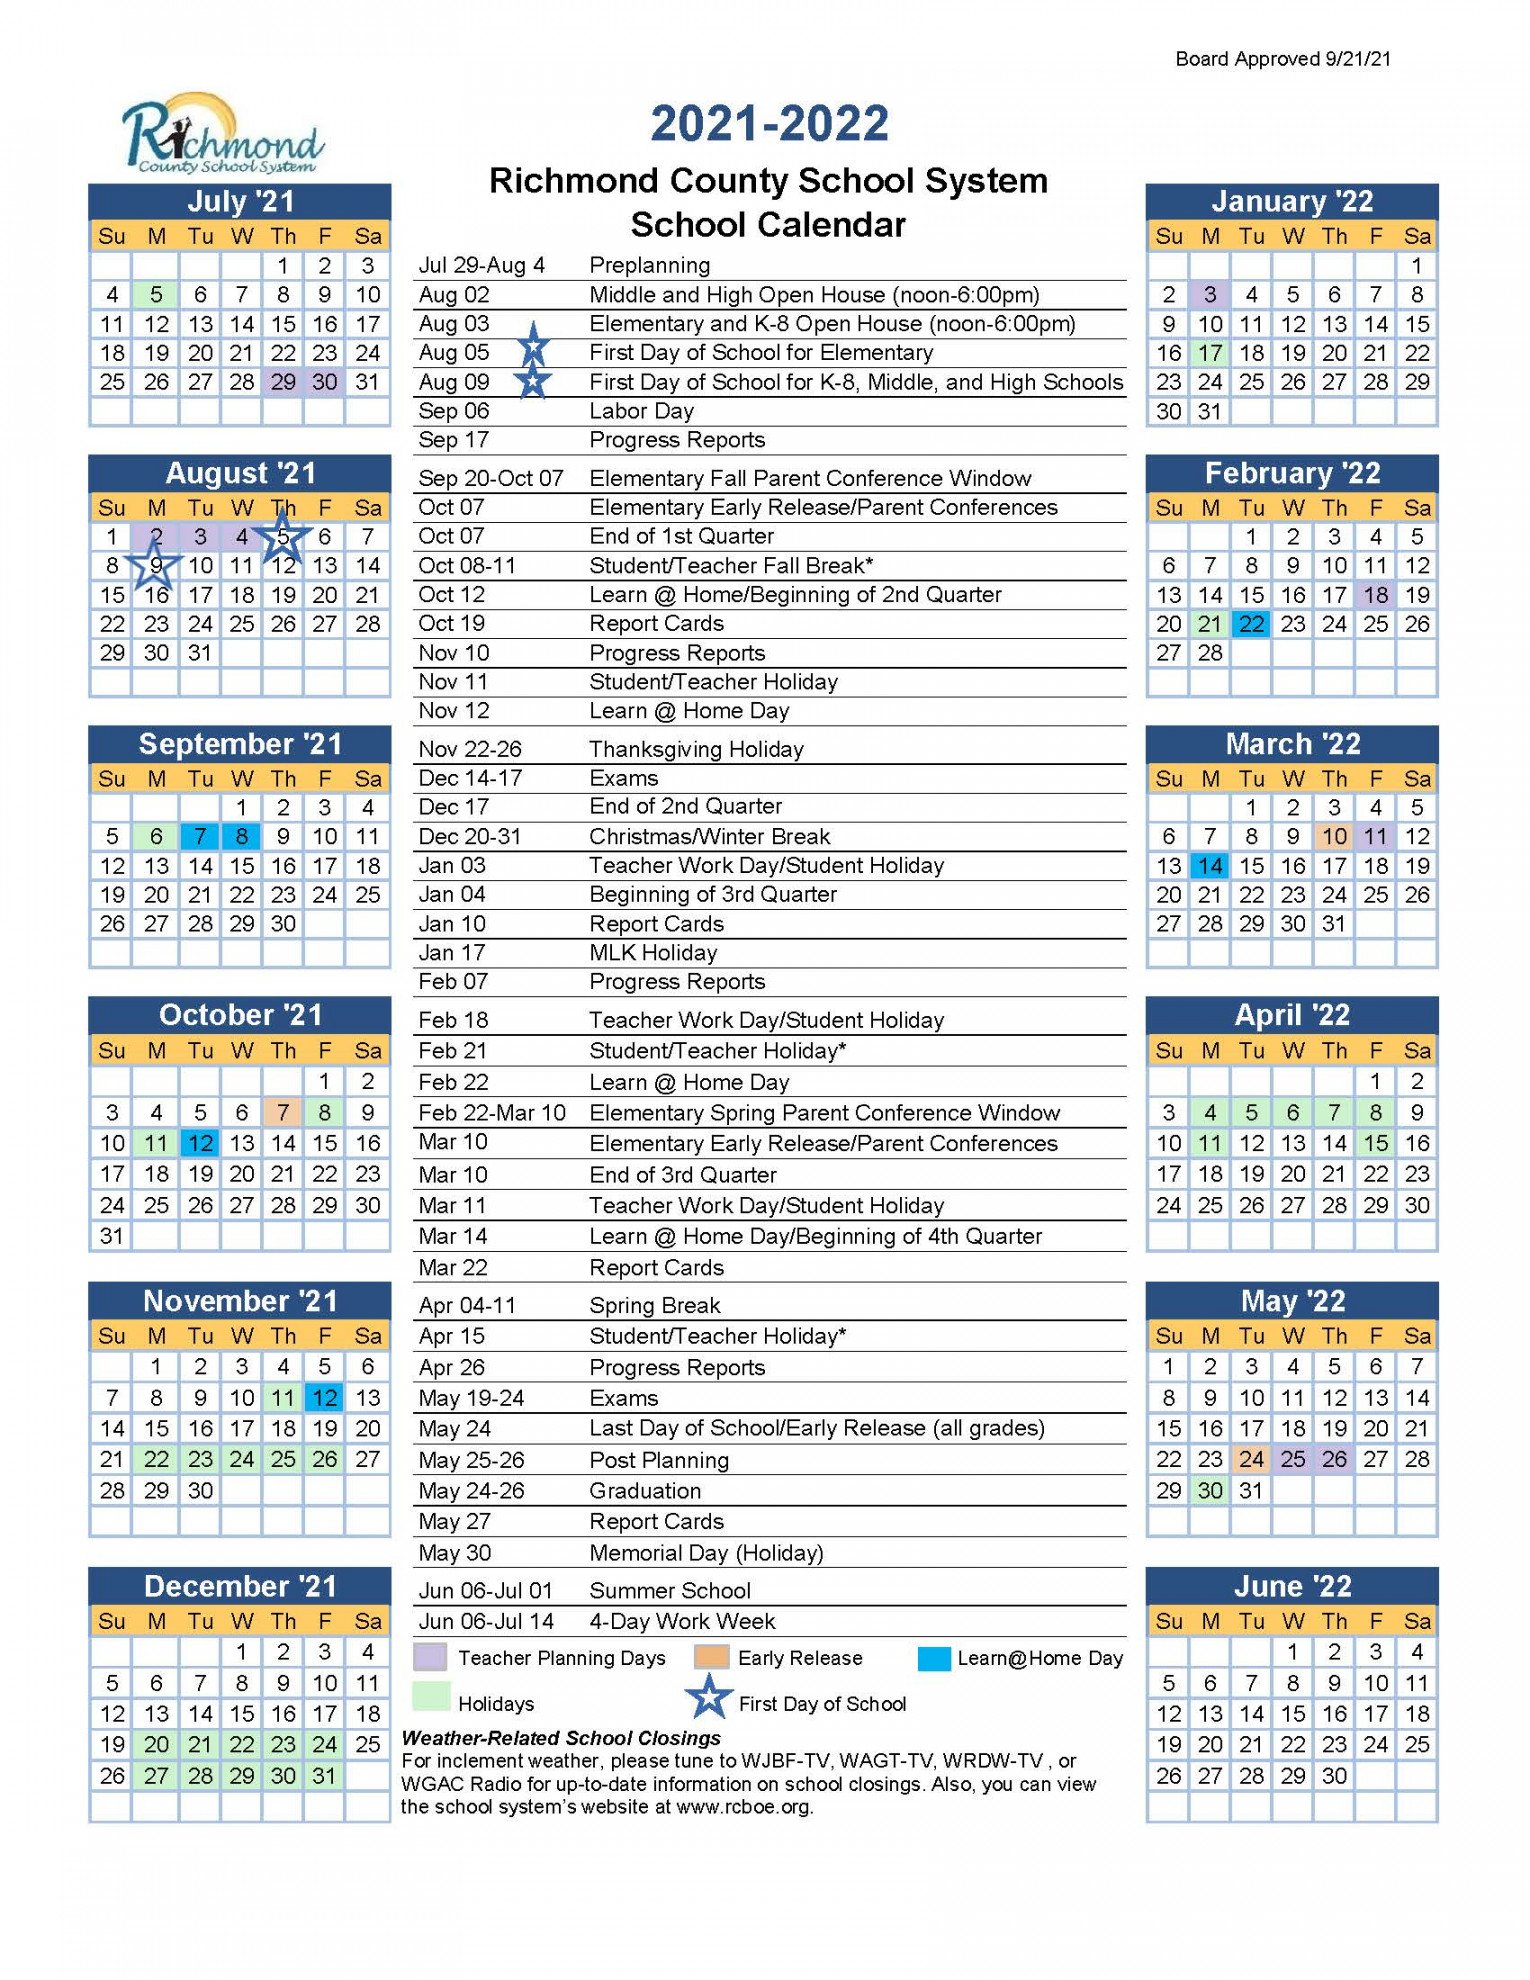 RCBOE adjusts - academic calendar  WJBF